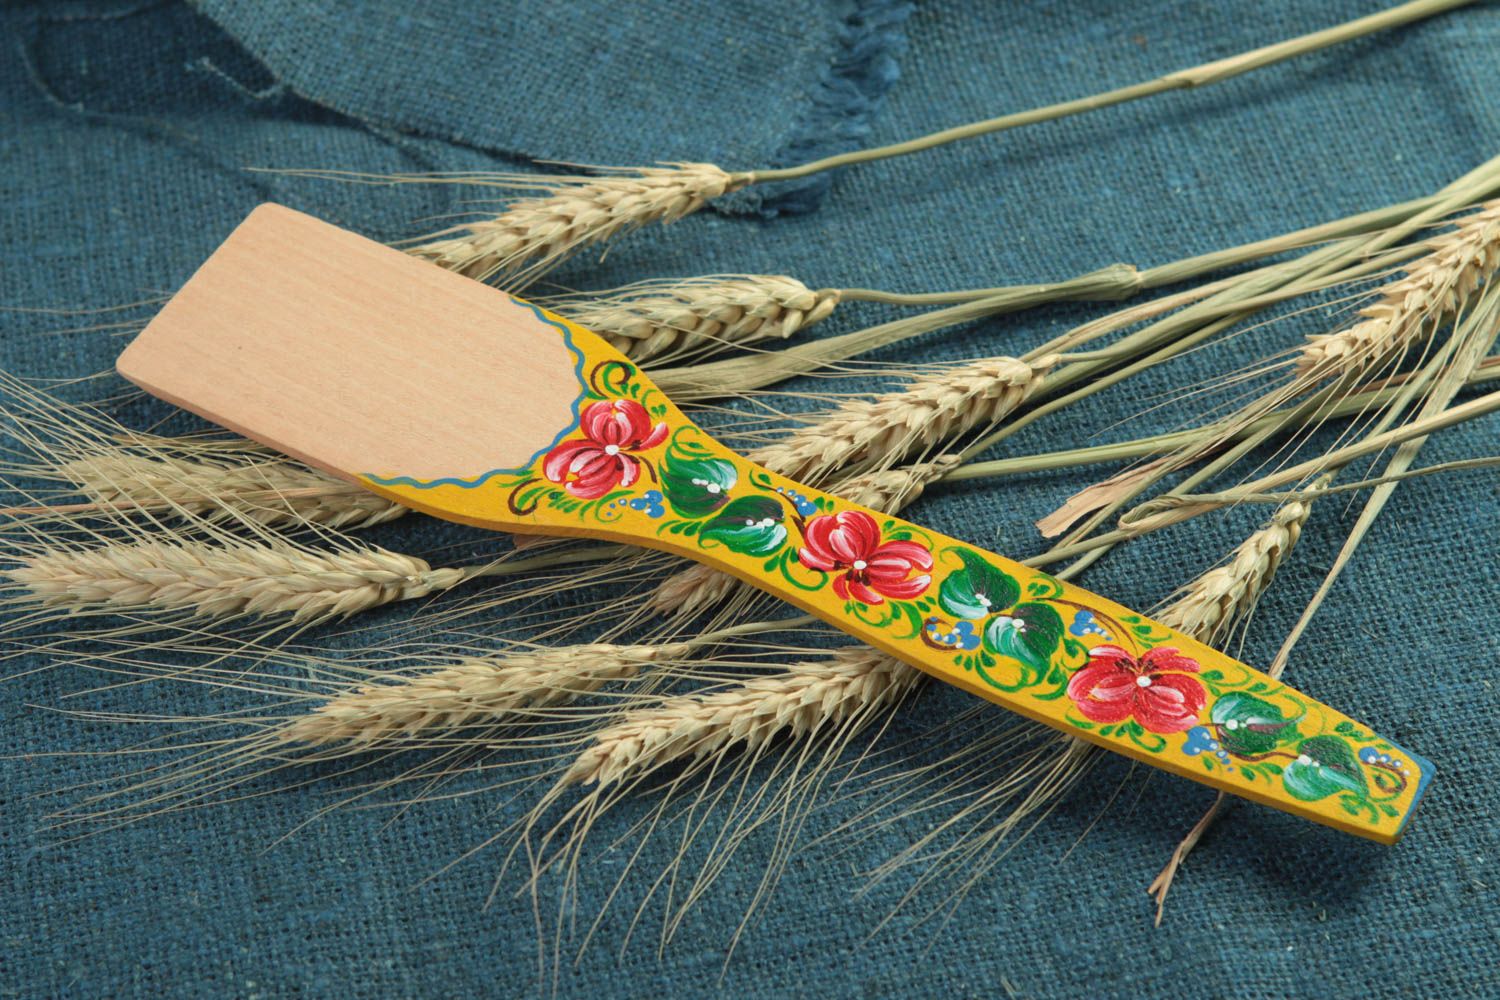 Beautiful homemade painted wooden spatula decorative kitchen utensils gift ideas photo 1